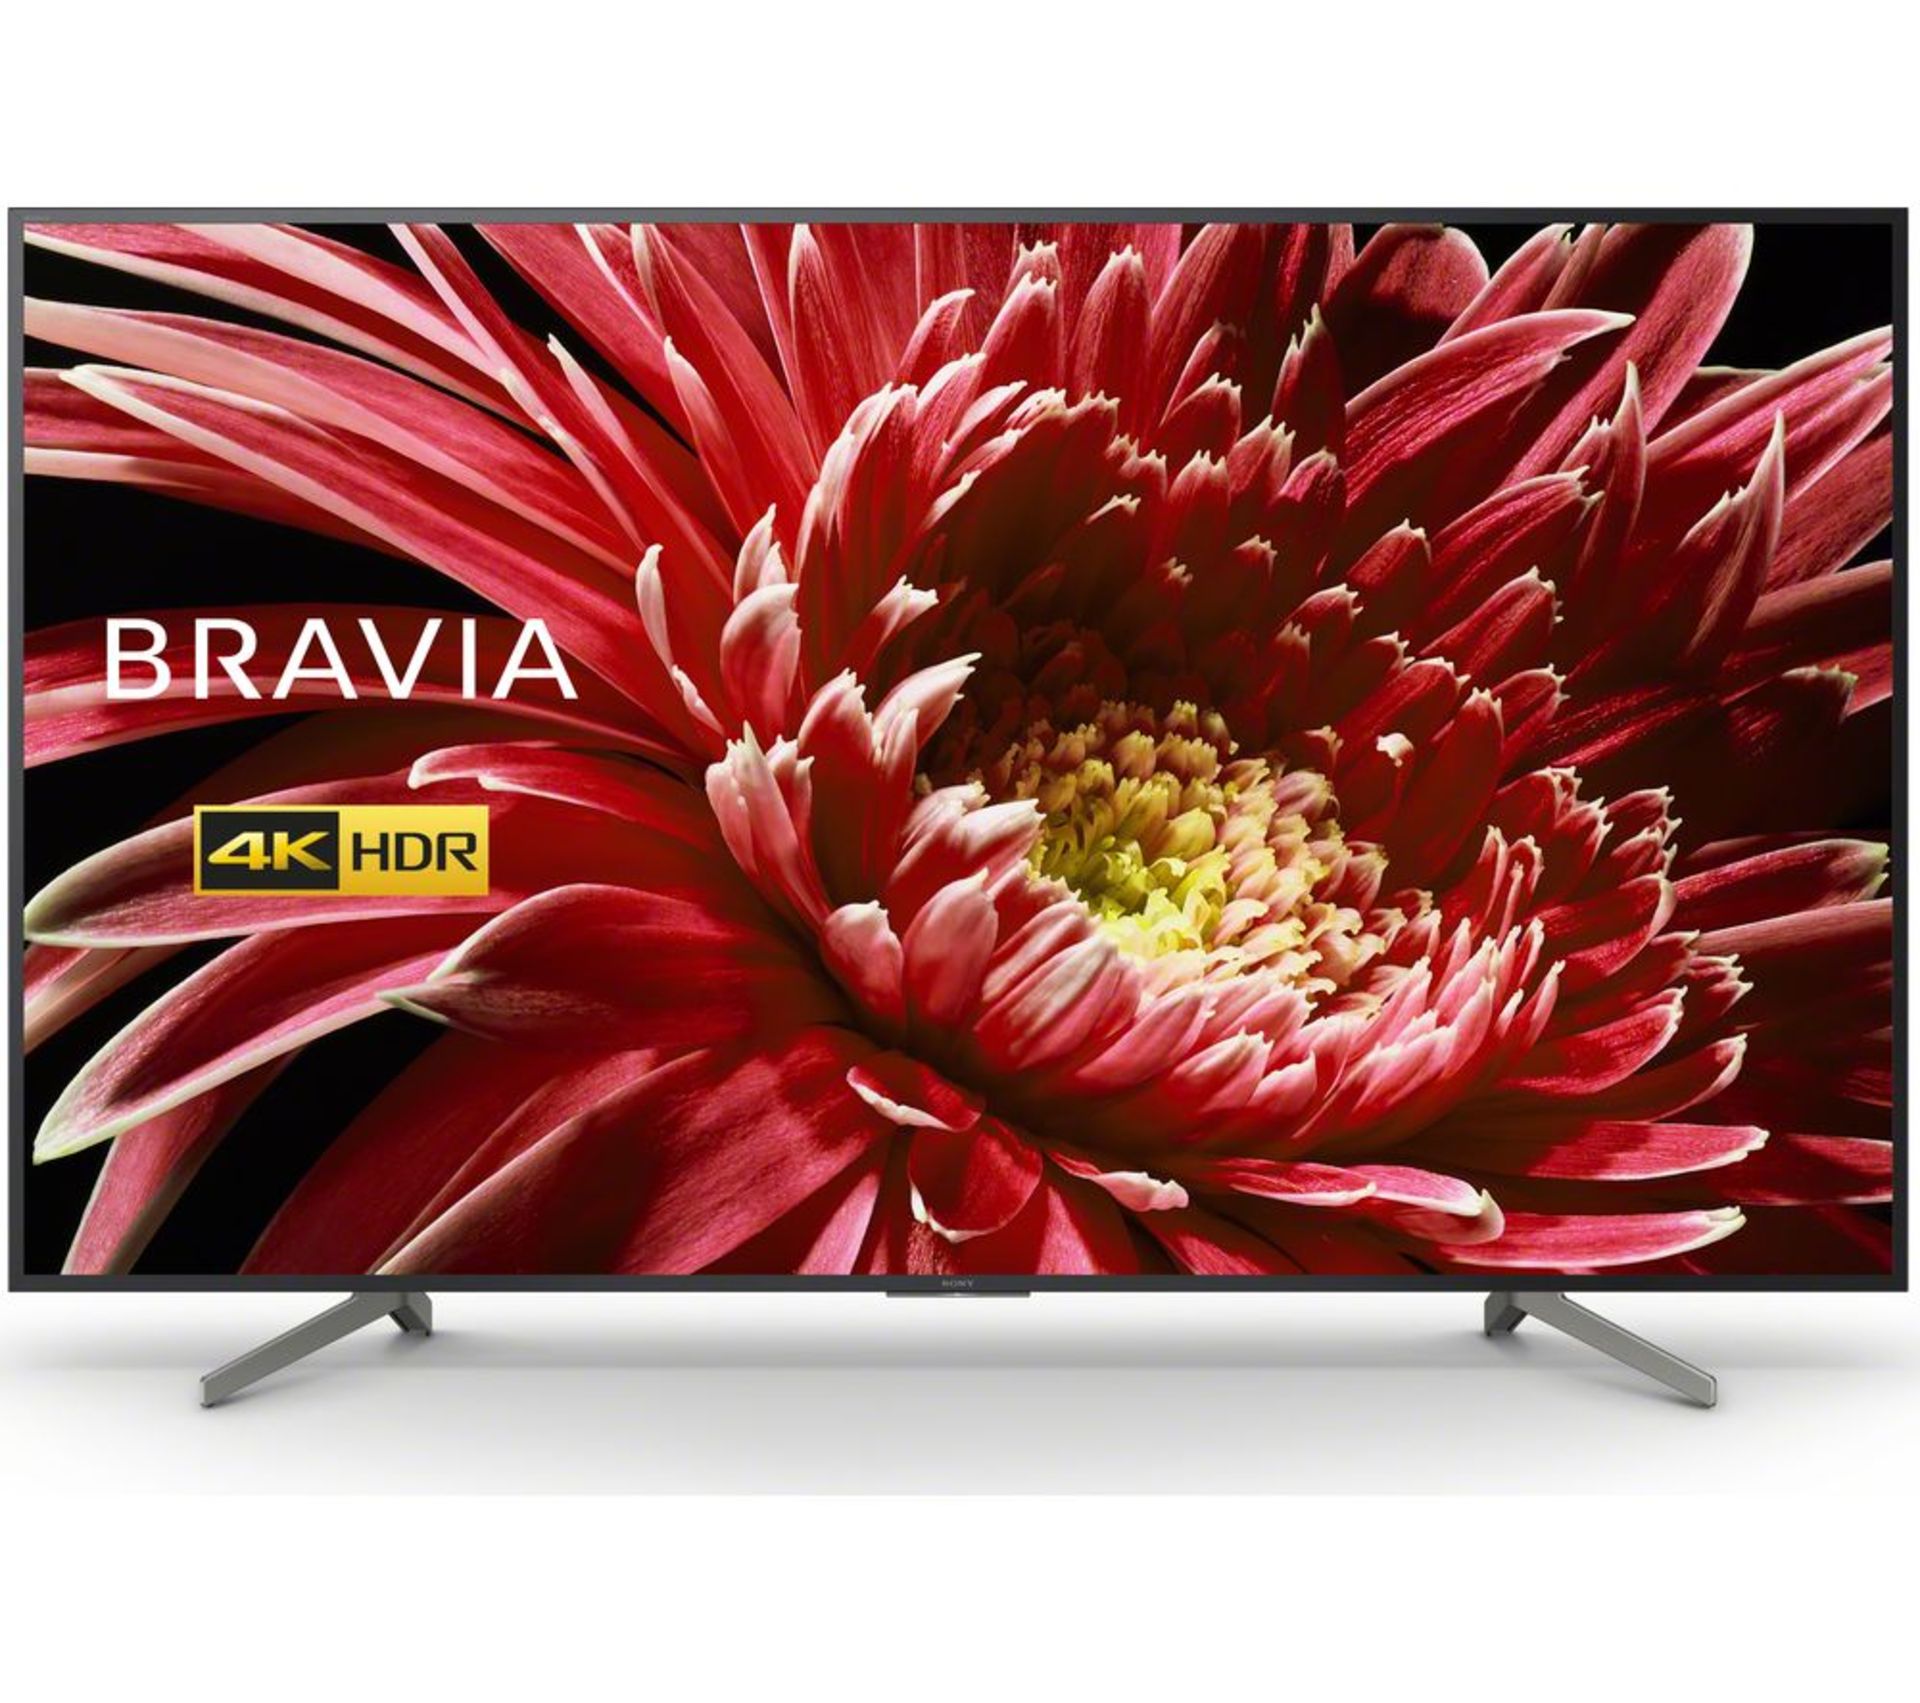 V Brand New Sony Bravia 85" 4K Ultra HD Smart LED TV - 4K Ultra HD 3840 x 2160p - Triluminos Display